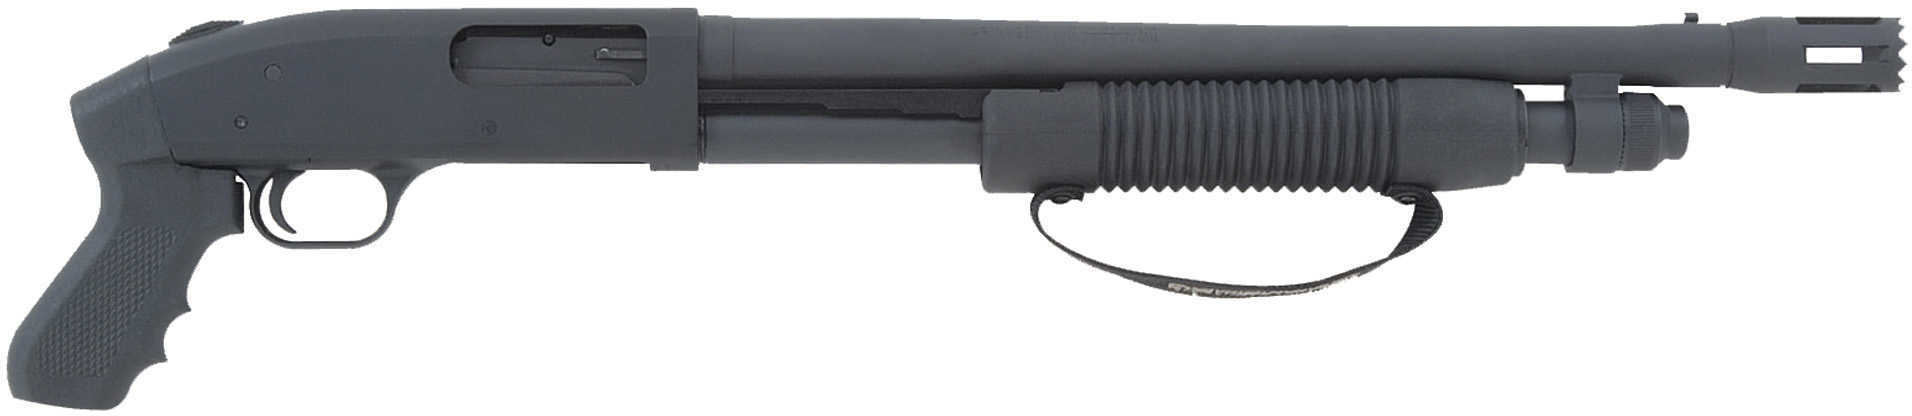 Mossberg Special Purpose Shotgun 500 Tactical Pistol Grip 12 Gauge 18.5" Barrel Blued Synthetic Stock 54125